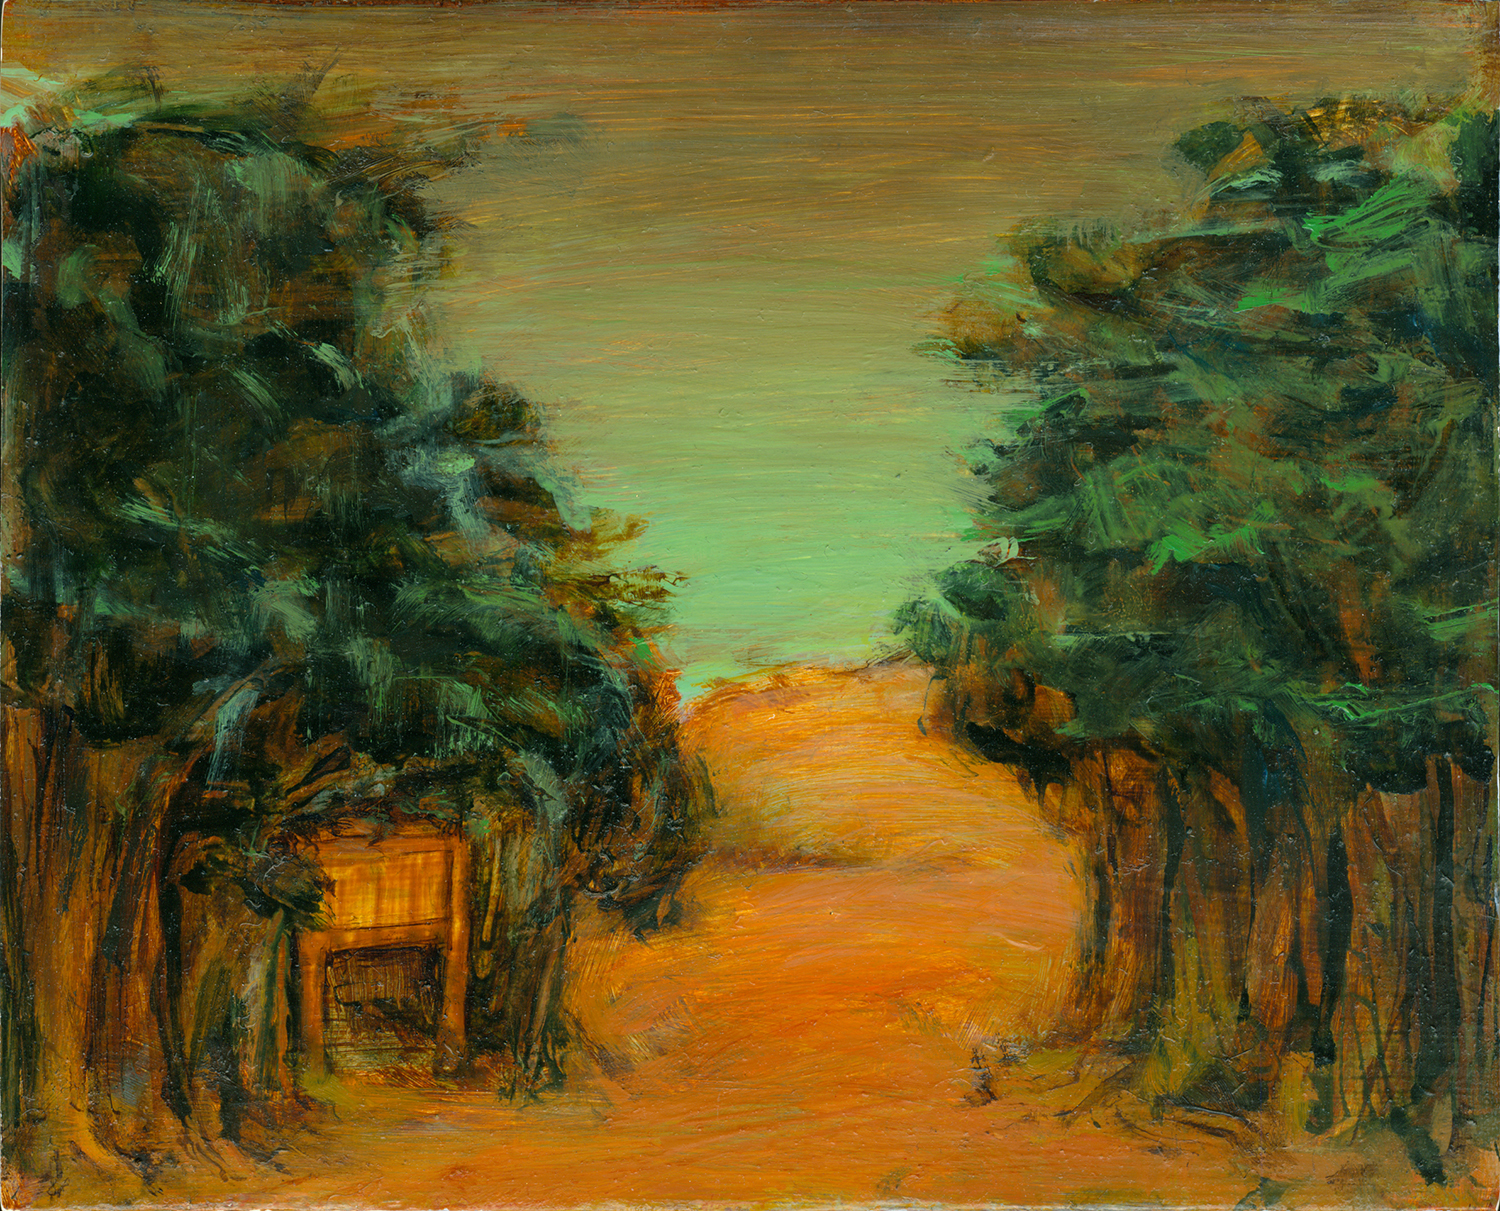    Rabbit hutch ,   2008,   oil on panel, 6 x 7 7/8 in.  